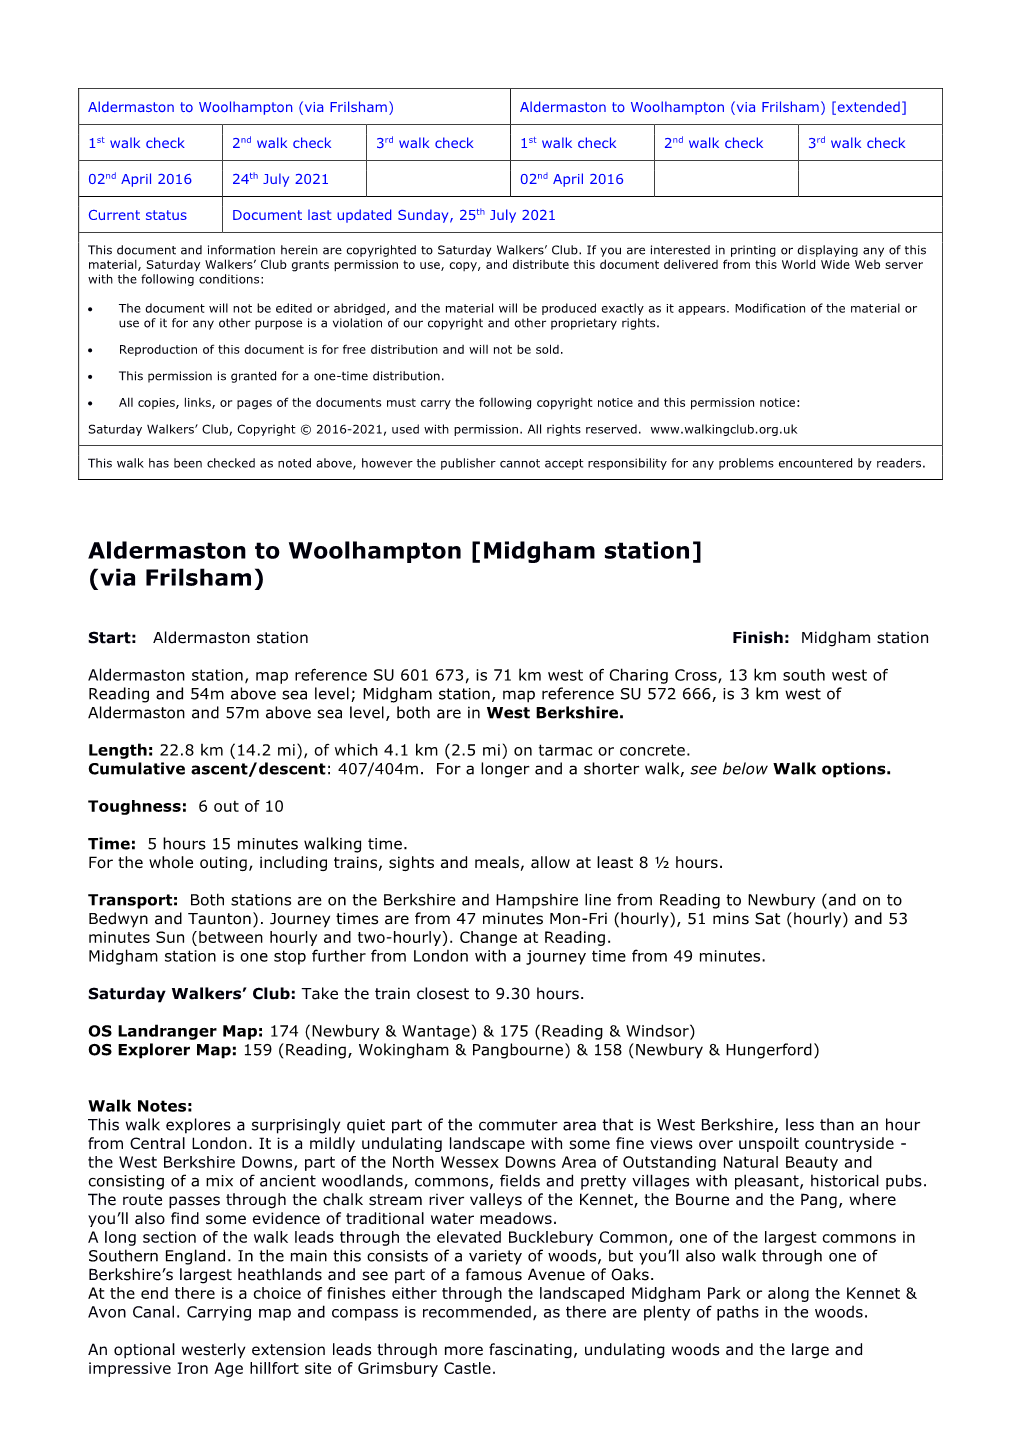 Aldermaston to Woolhampton (Via Frilsham) Aldermaston to Woolhampton (Via Frilsham) [Extended]